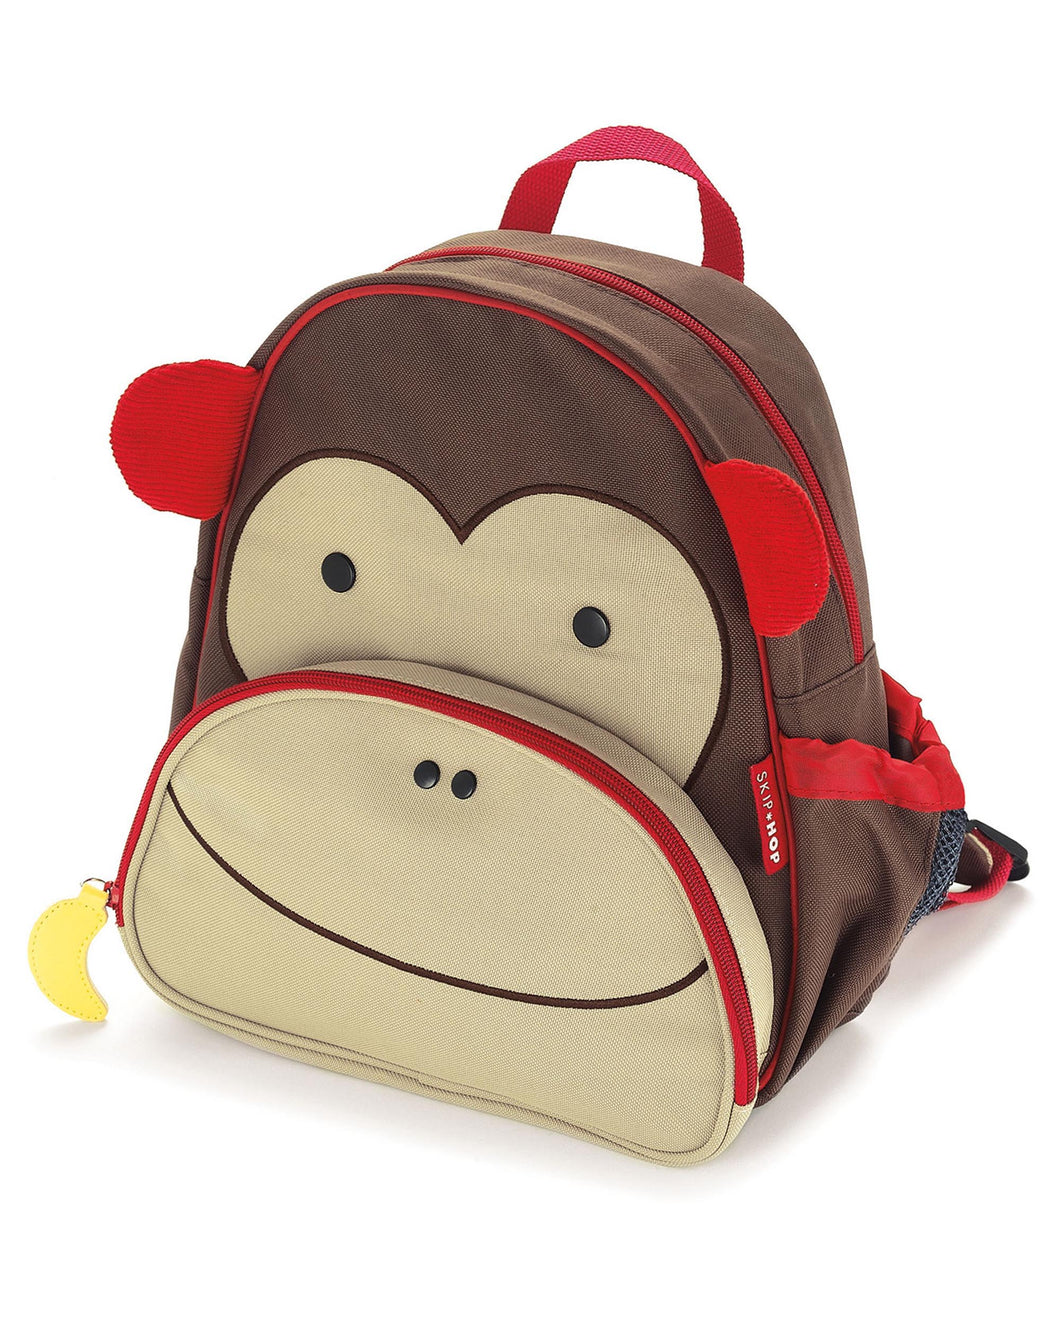 Skip Hop Kids Backpack - Monkey - CeCe Fashion Boutique